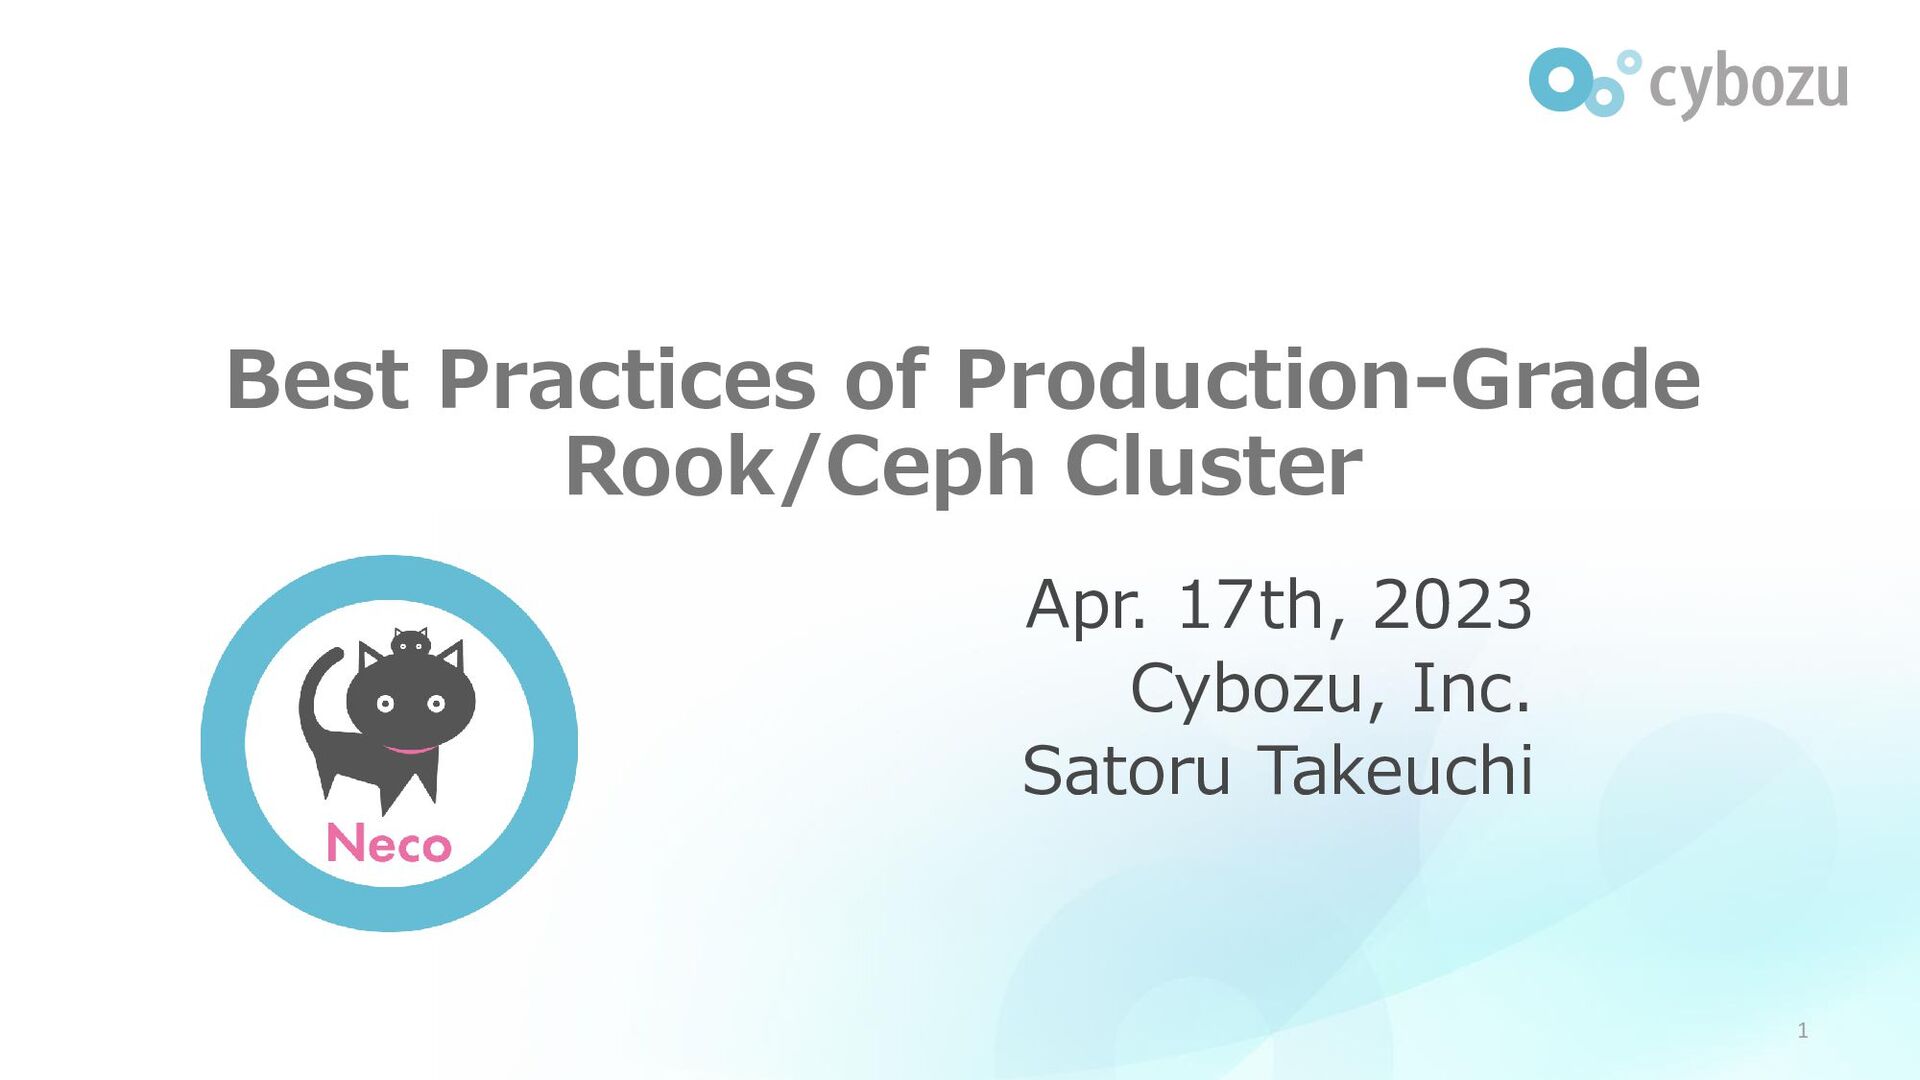 Slide Top: Best Practices of Production-Grade Rook/Ceph Cluster